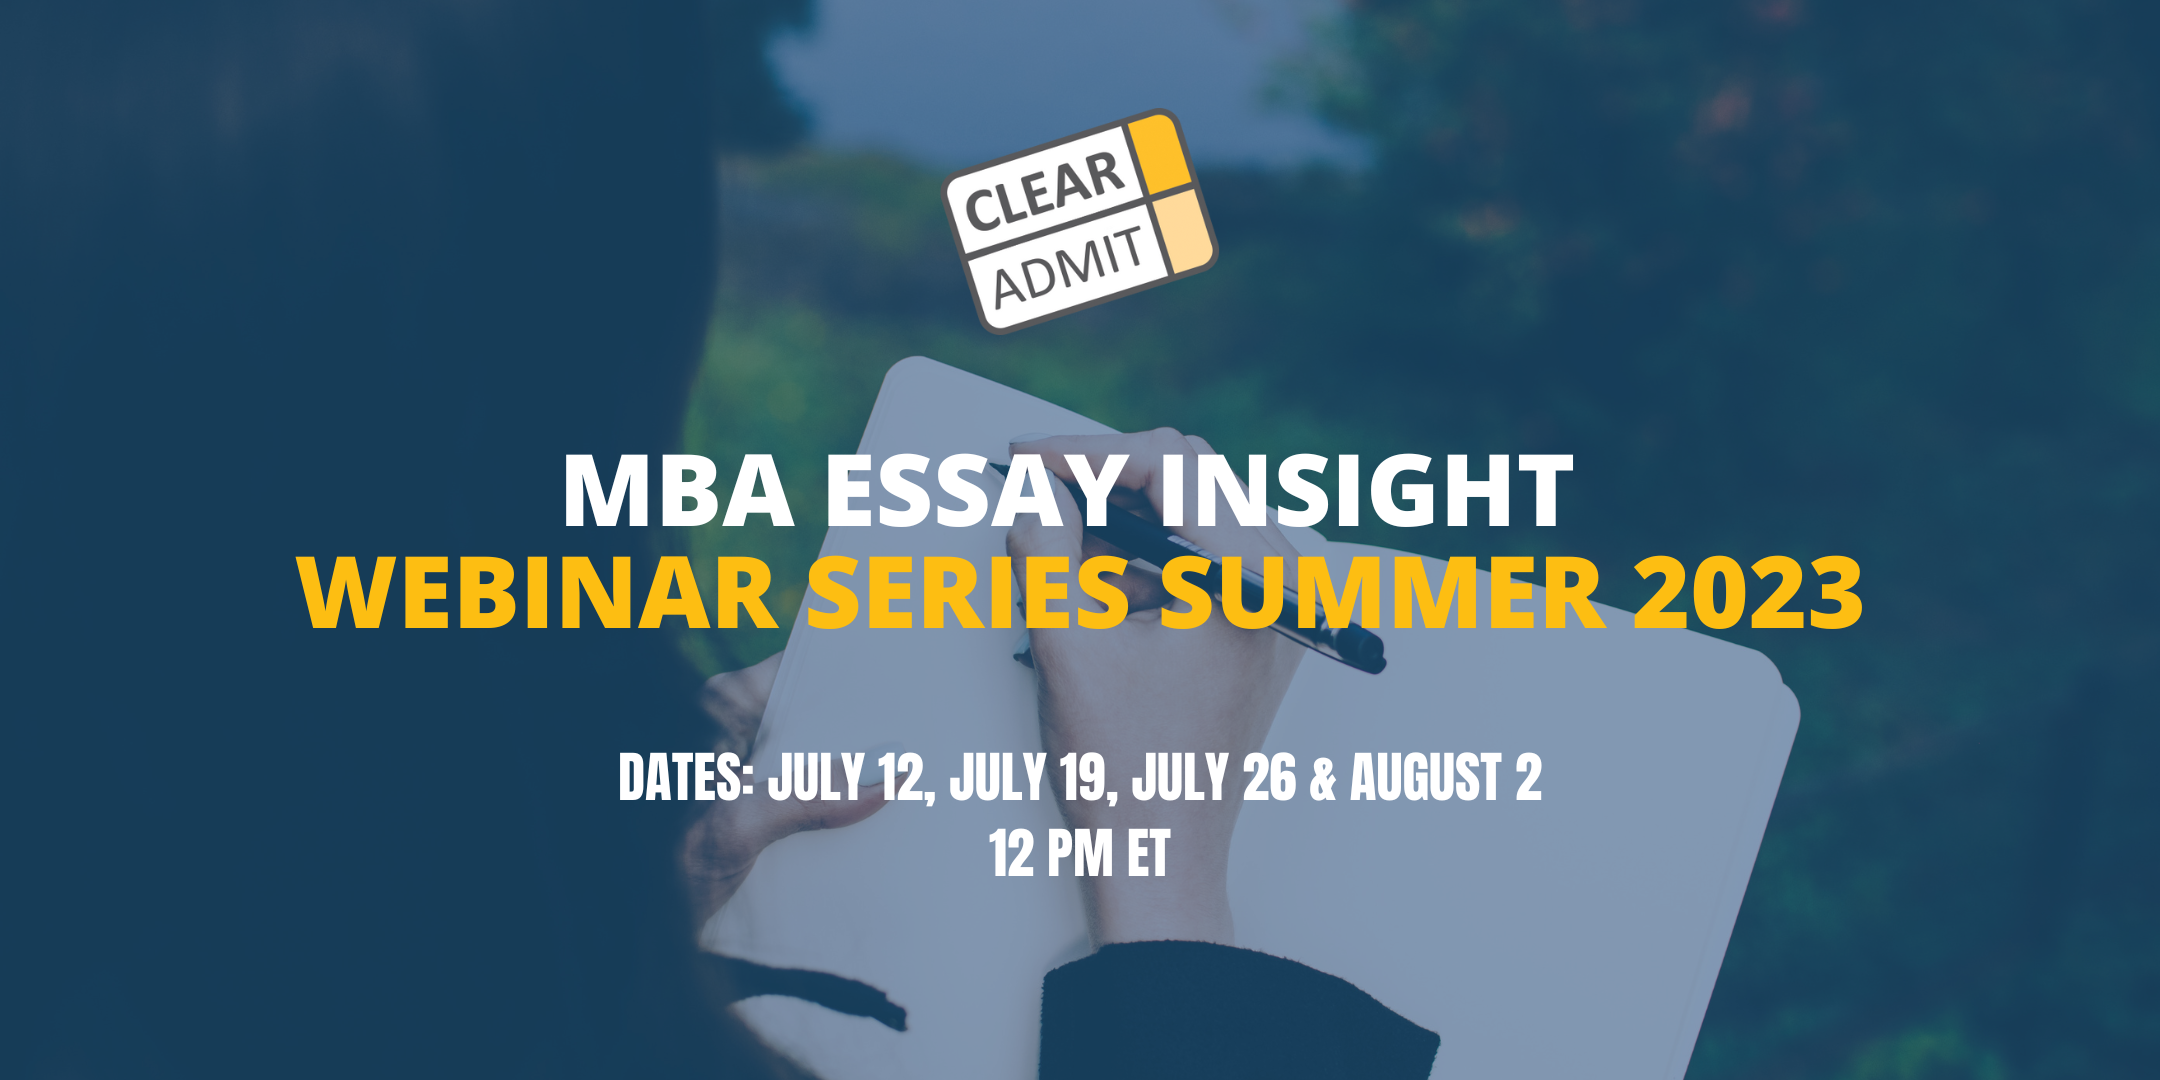 Image for MBA Essay Insight Webinar Series Summer 2023